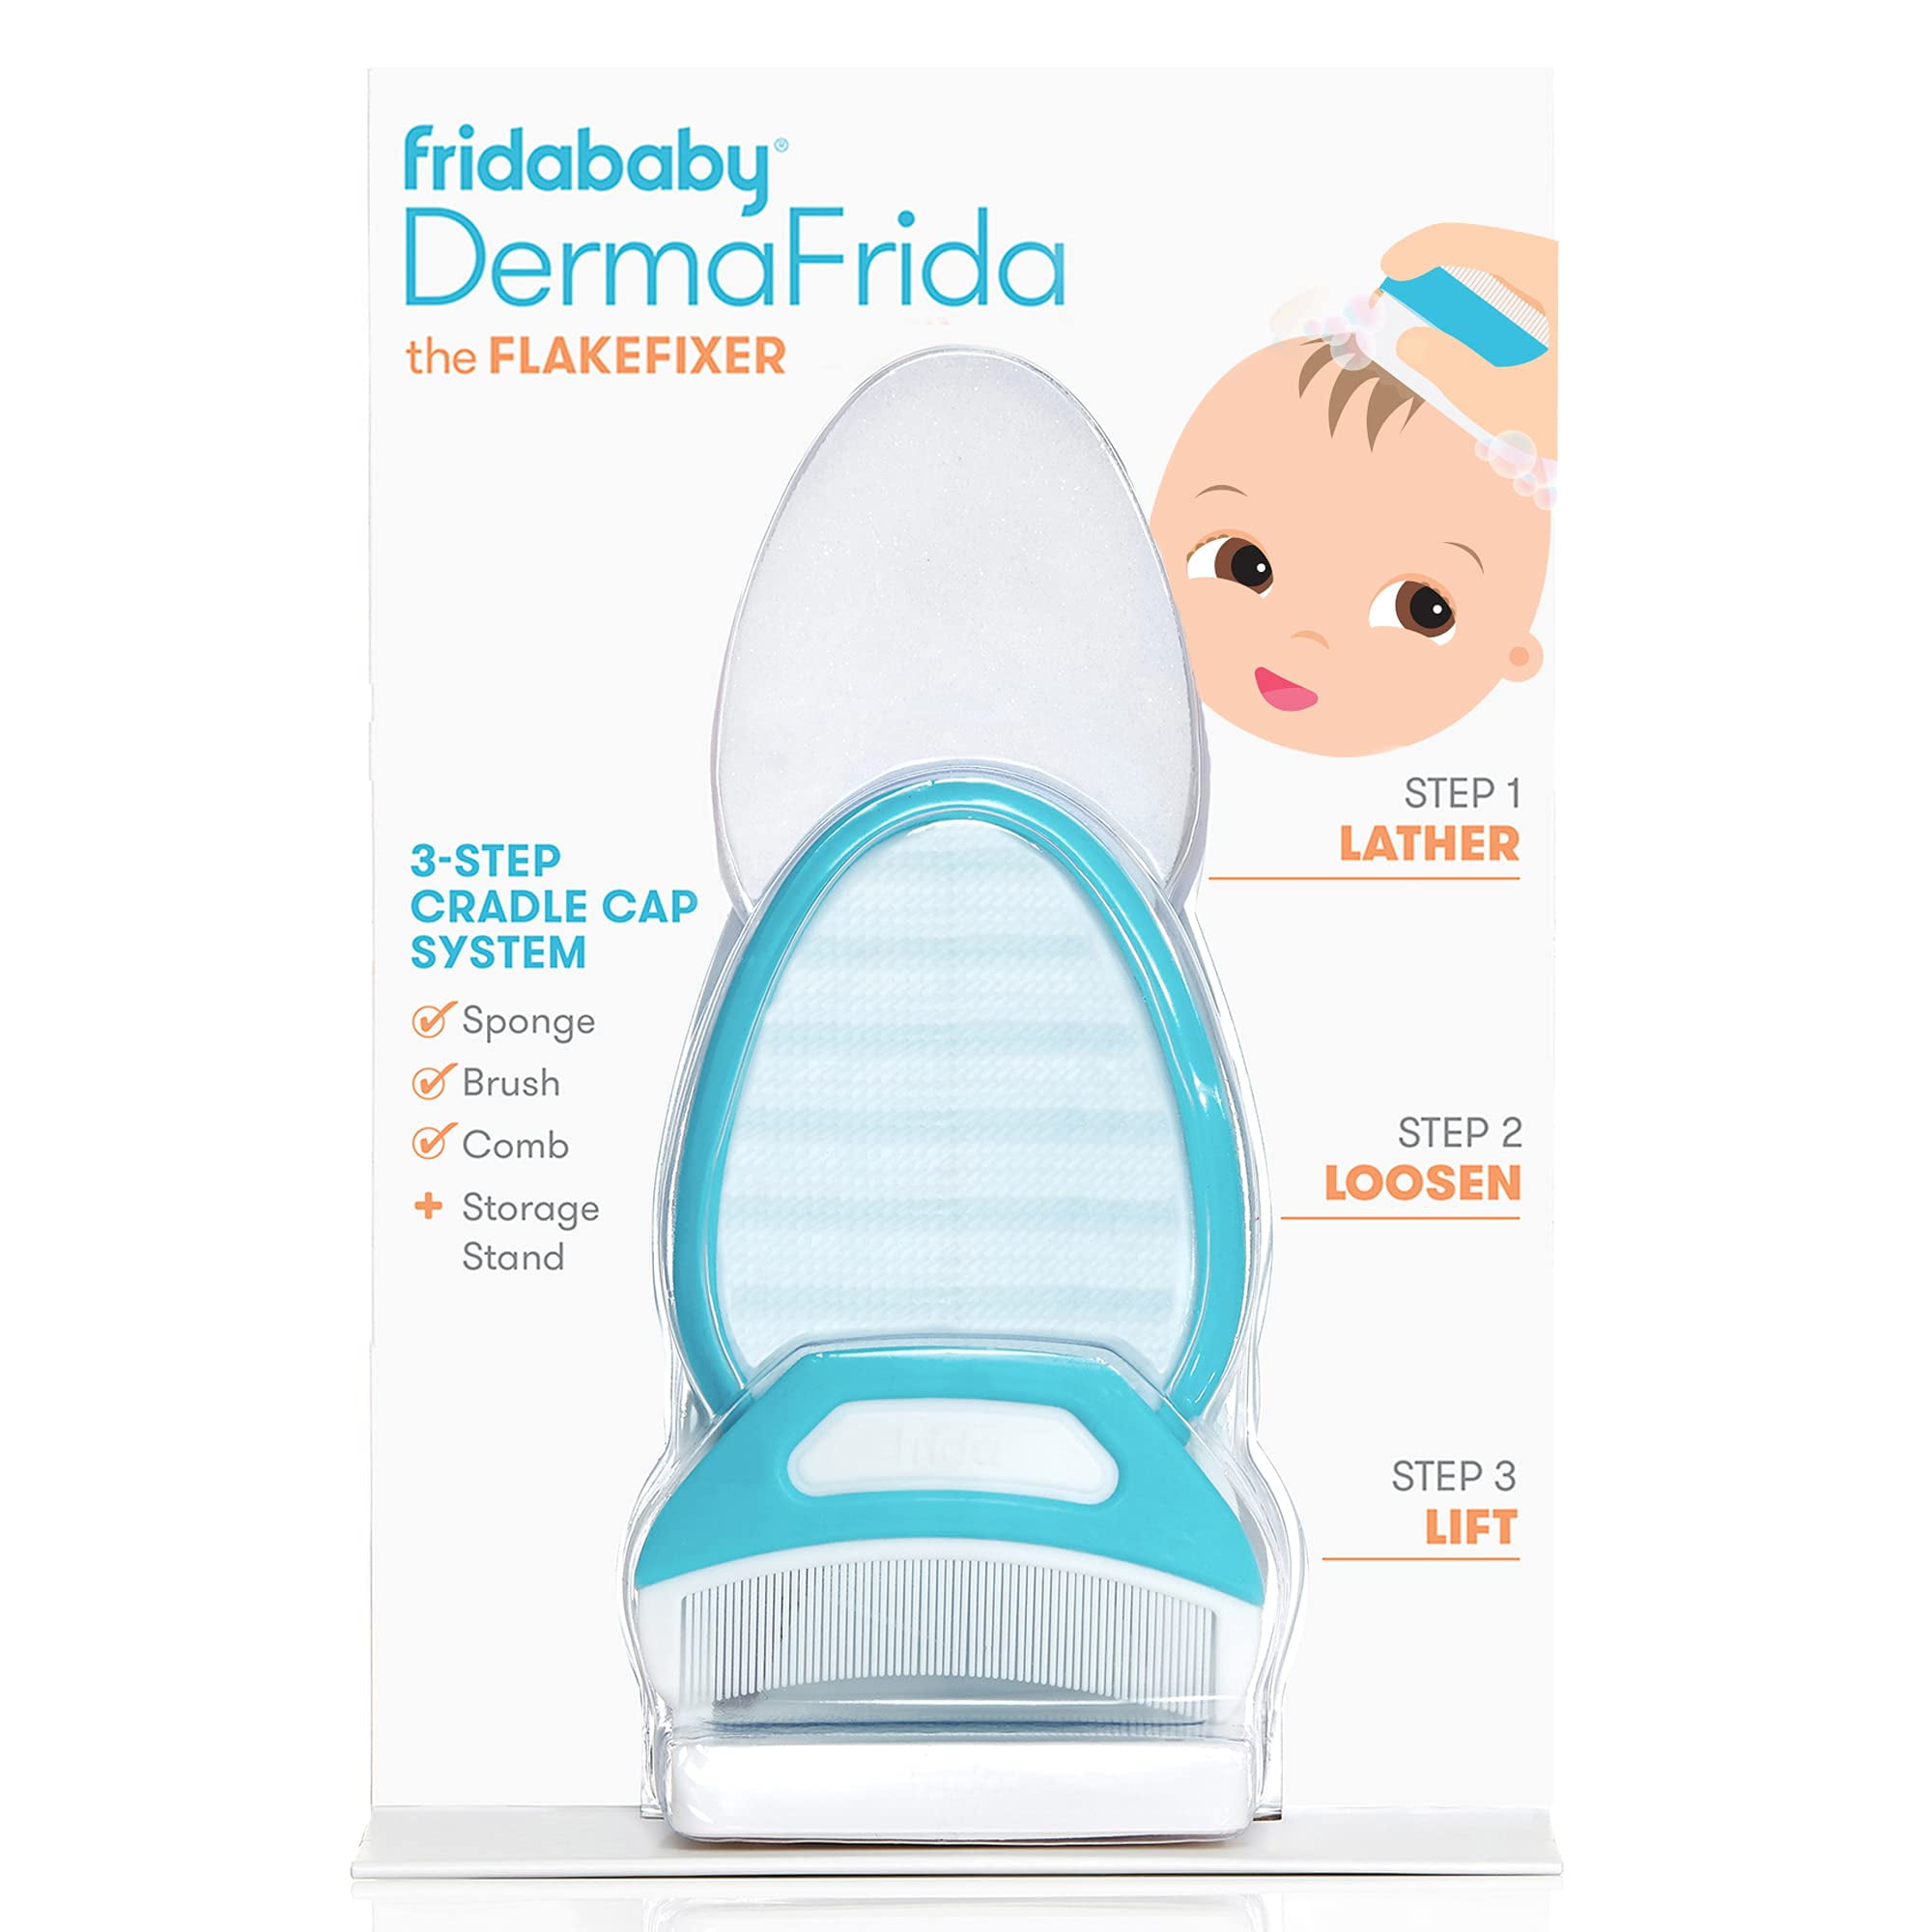 Fridababy Baby Basics Kit, Includes NoseFrida SnotSucker, Windi Gaspasser,  NailFrida SnipperClipper Kit and DermFrida SkinSoother 